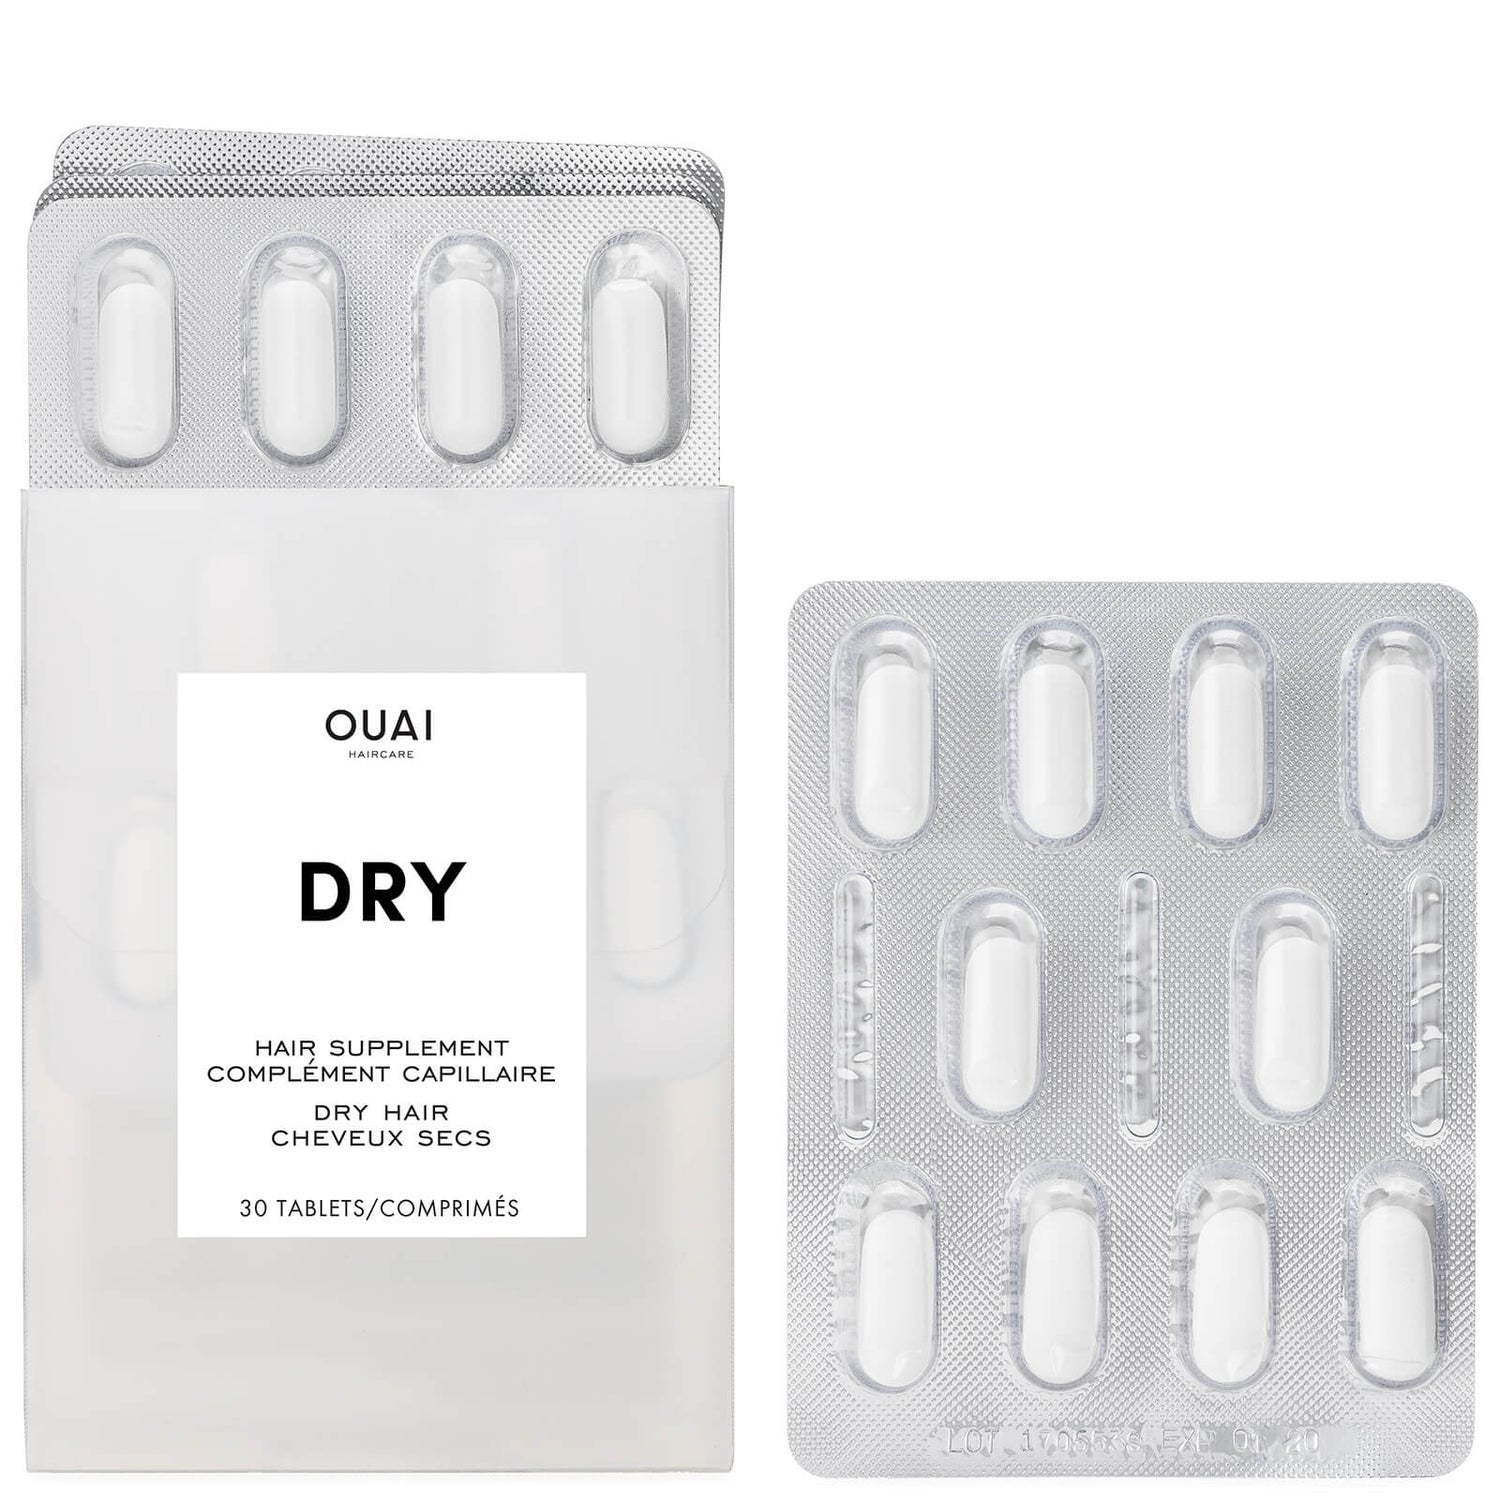 OUAI Dry Hair Supplement